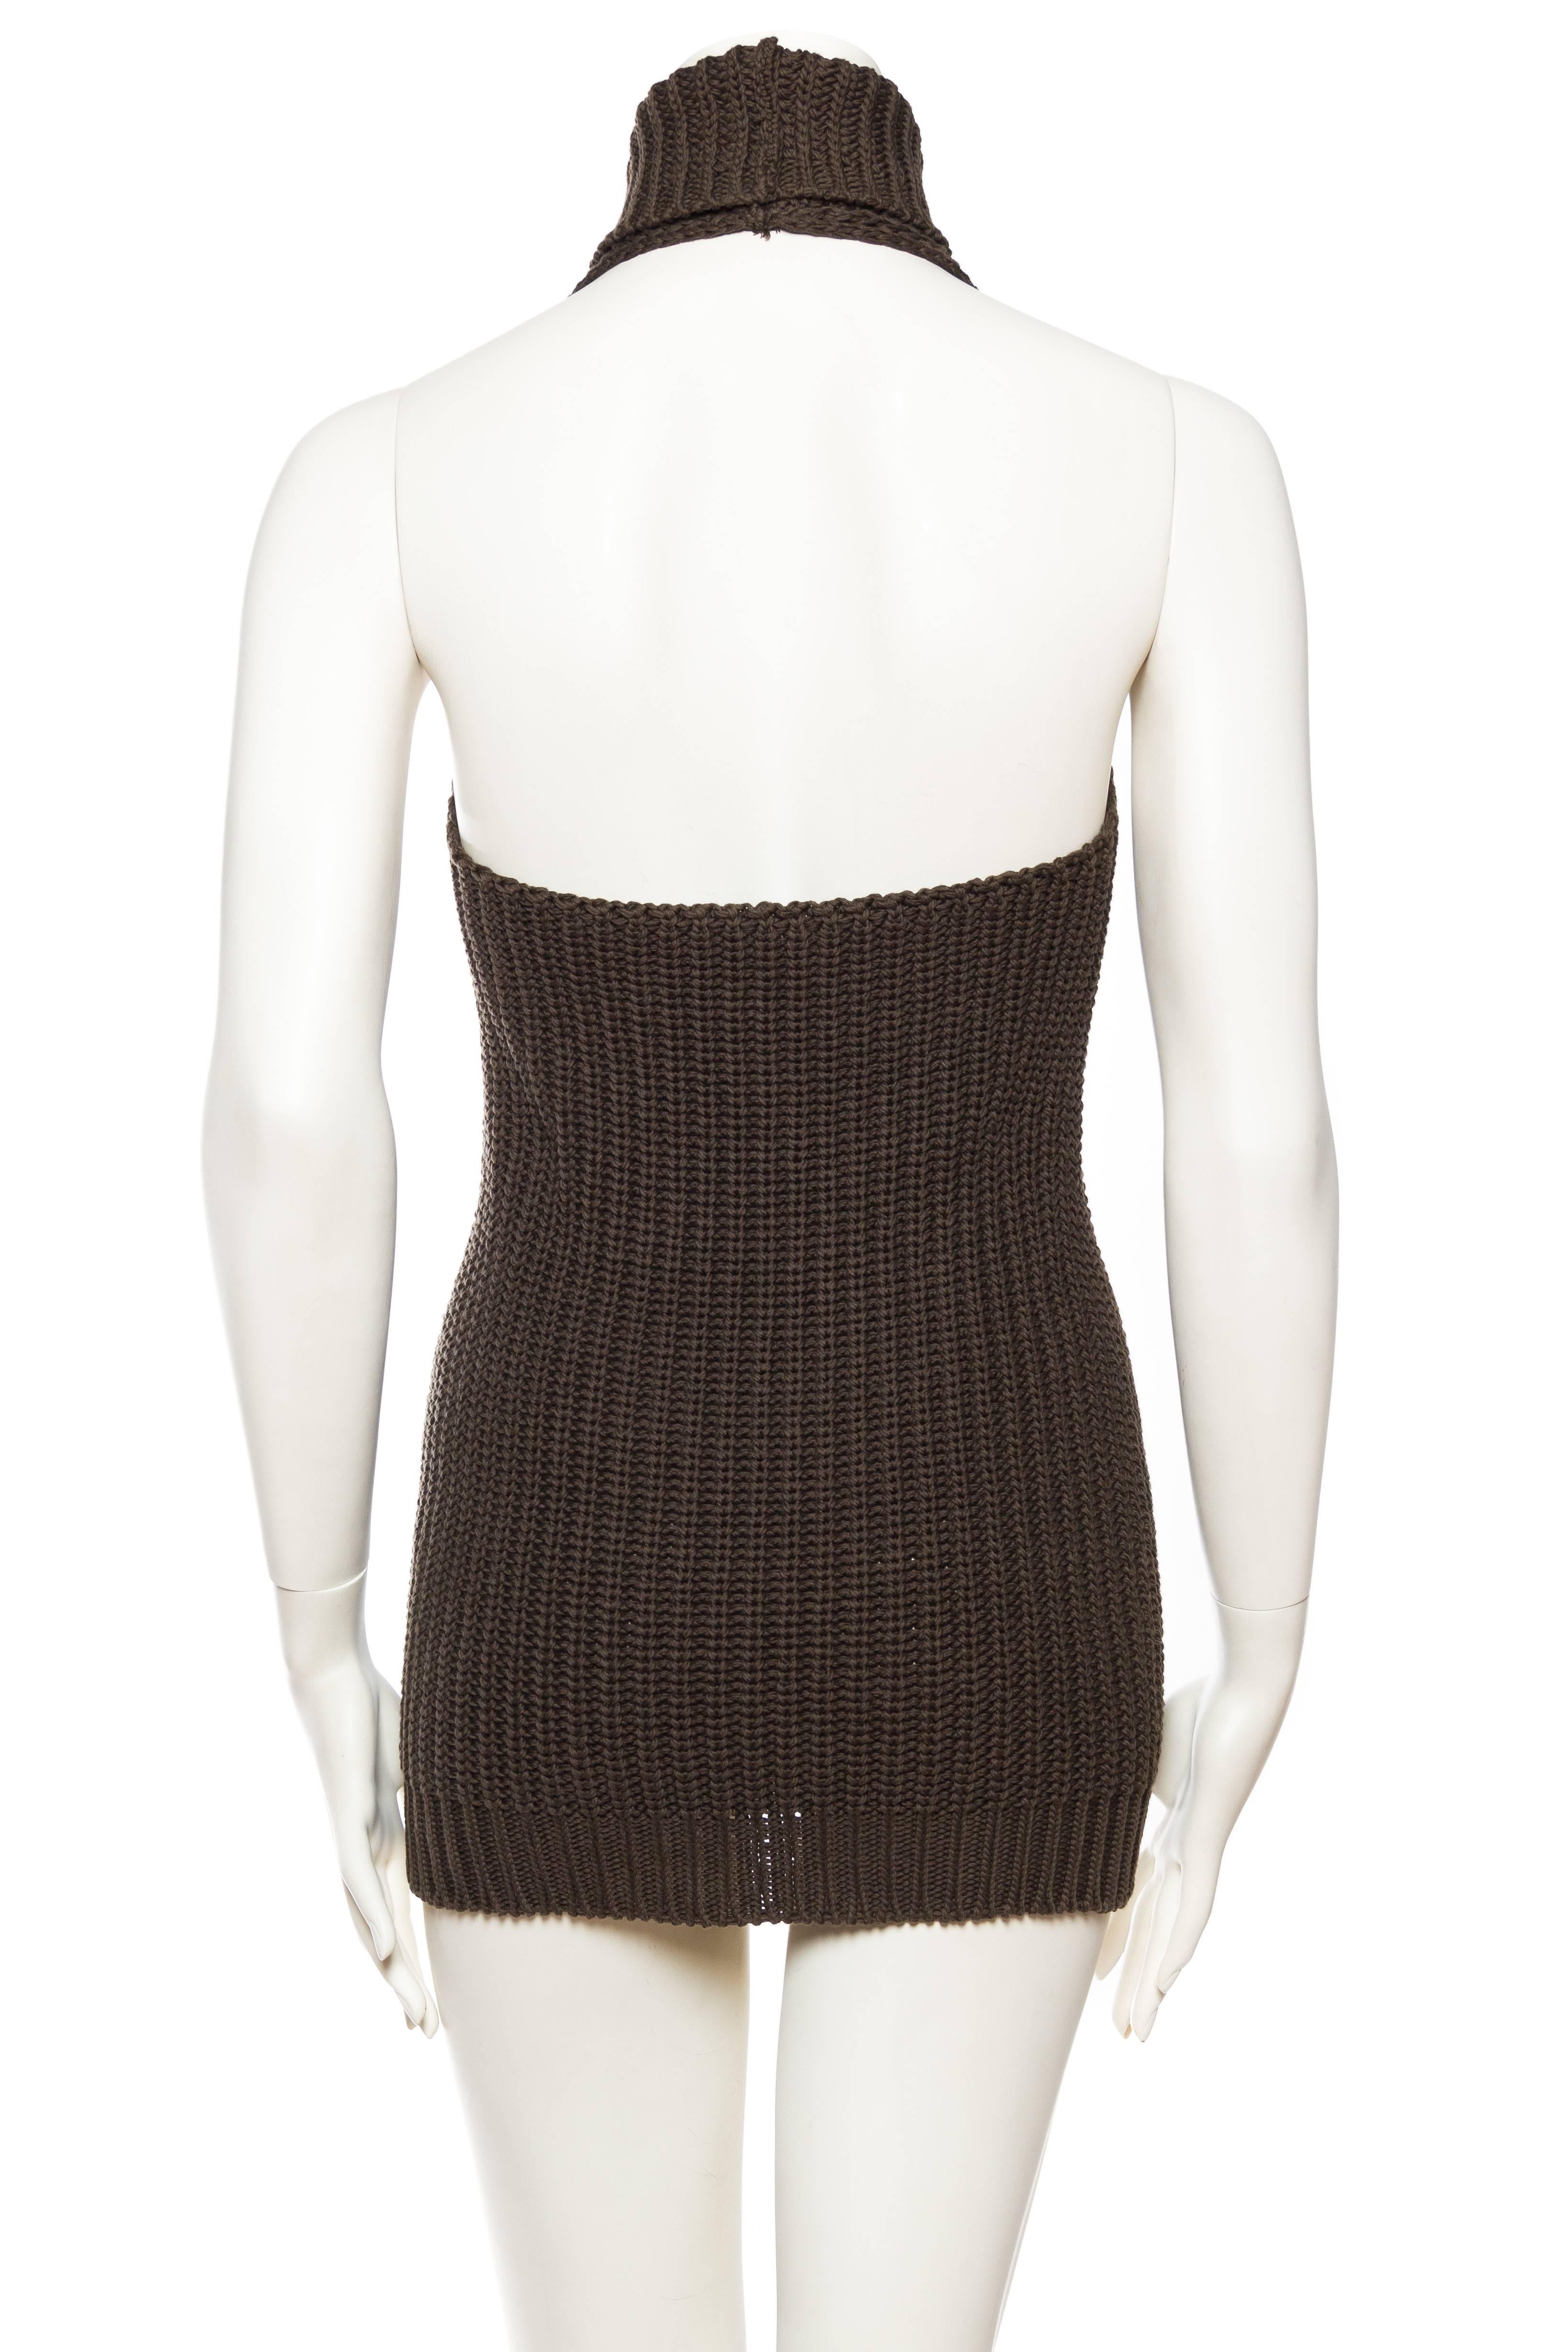 1990S Cotton Backless Knit Cowl Neck Halter Top Mini Dress 1